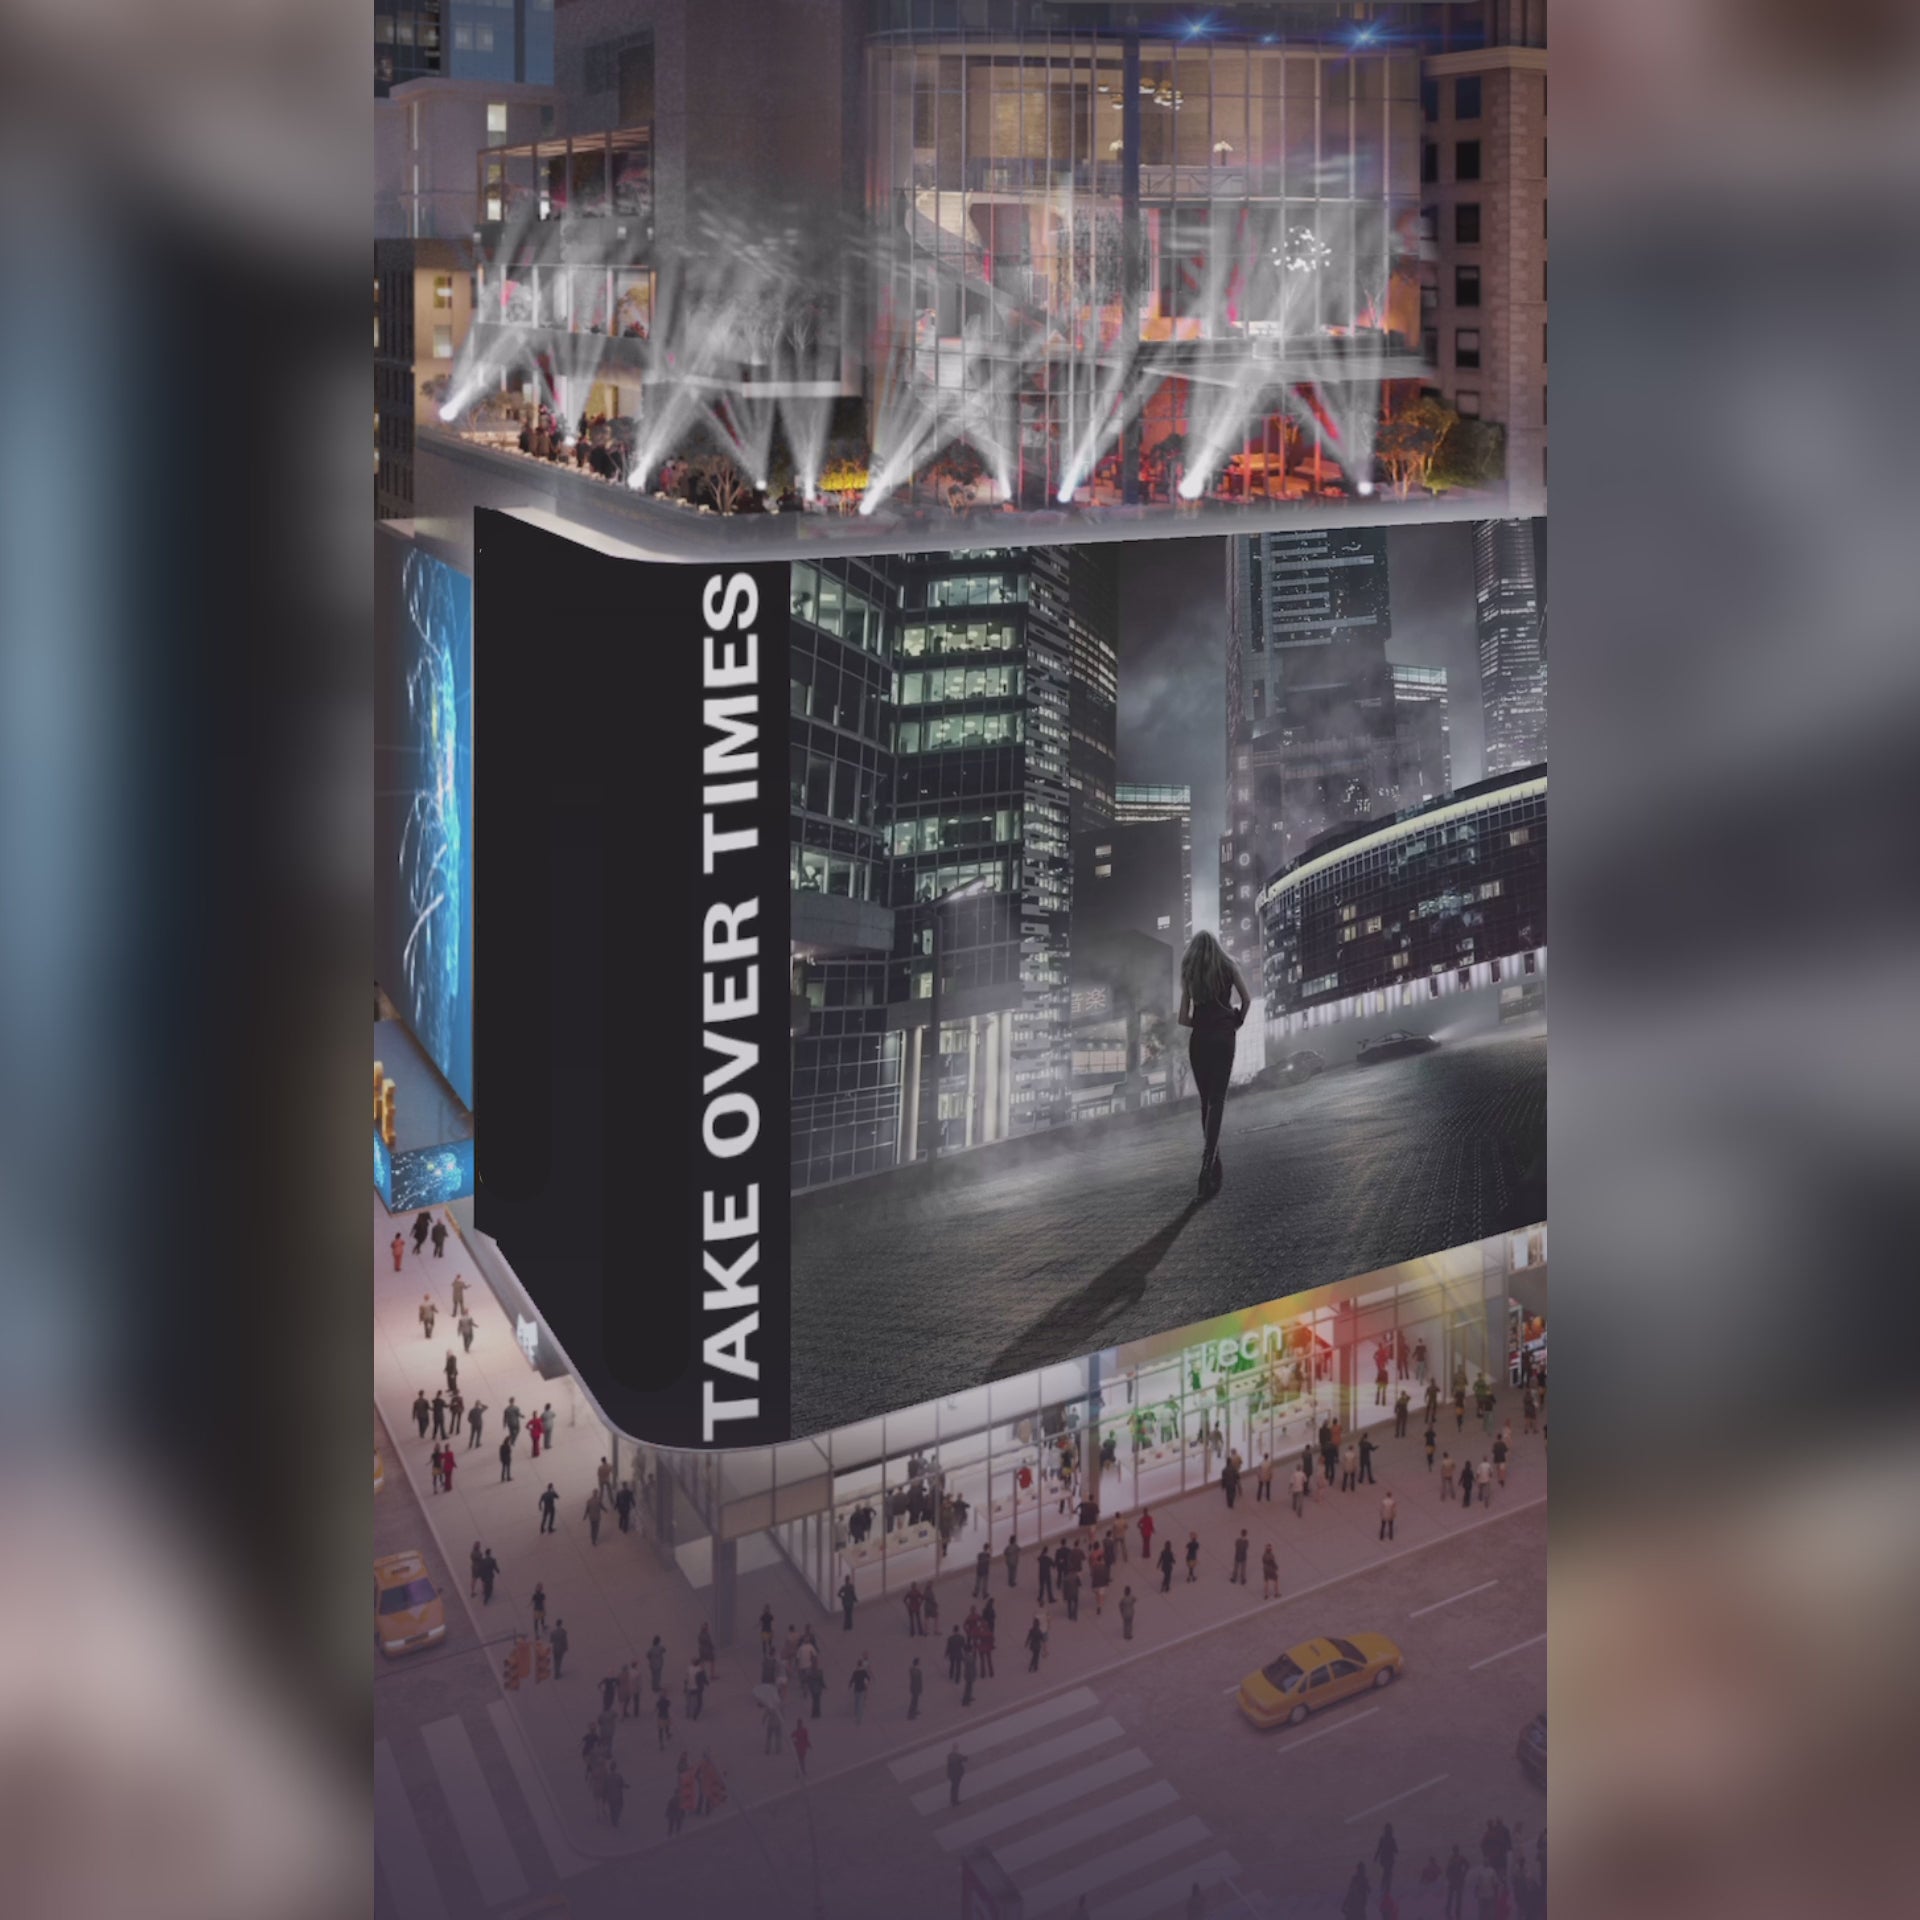 Cartelera publicitaria de Broadway Times Square de 1568 [15 segundos]